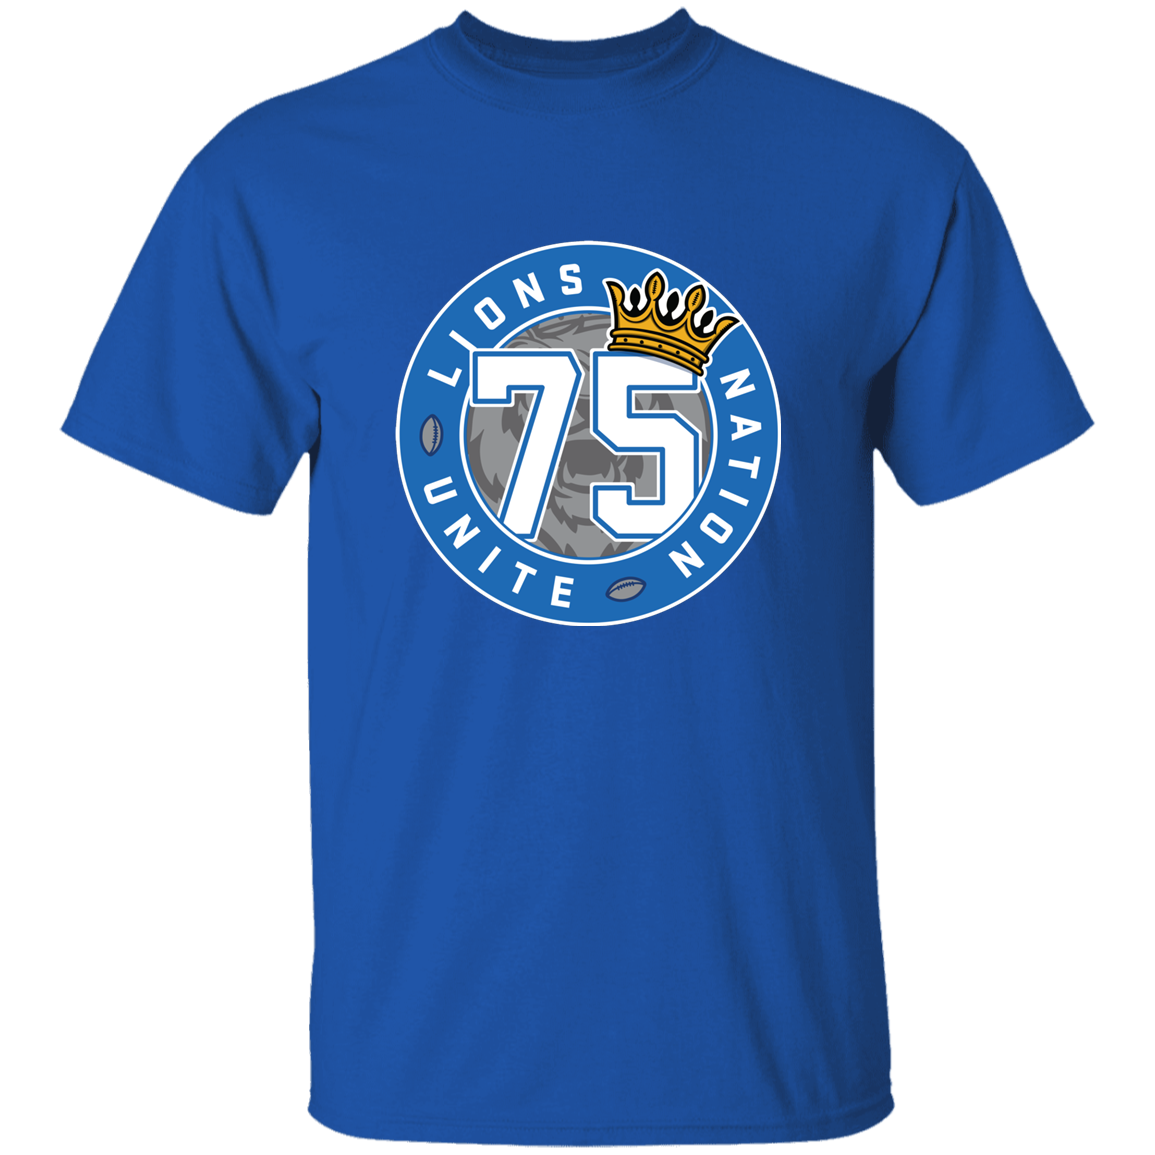 No. 75 Lions Nation Unite® Youth T-Shirt